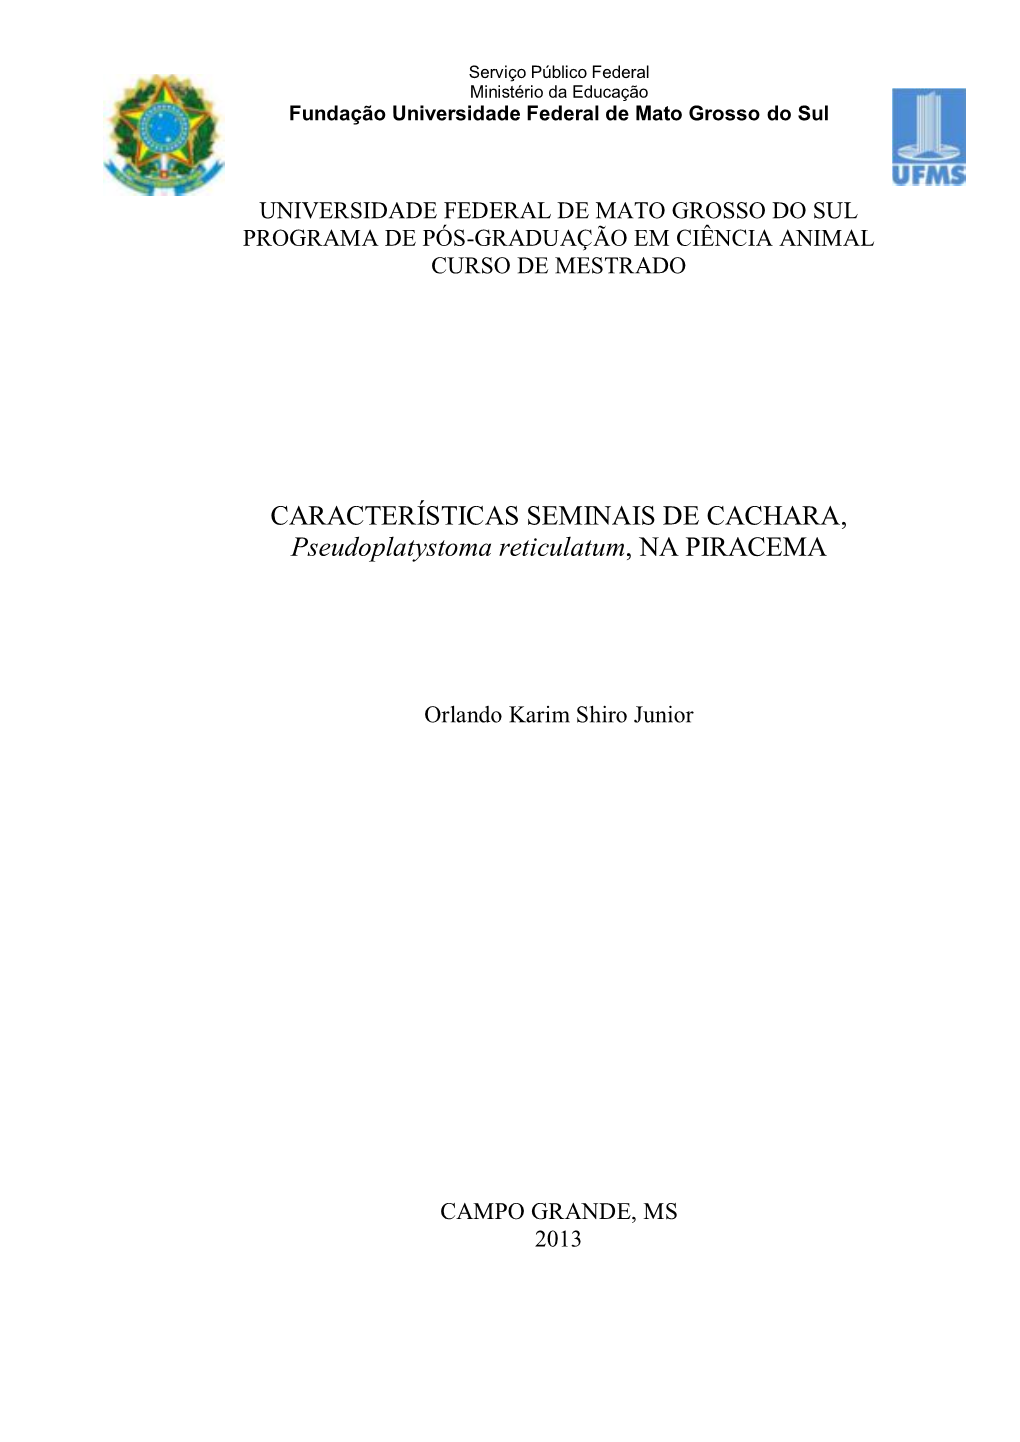 CARACTERÍSTICAS SEMINAIS DE CACHARA, Pseudoplatystoma Reticulatum, NA PIRACEMA